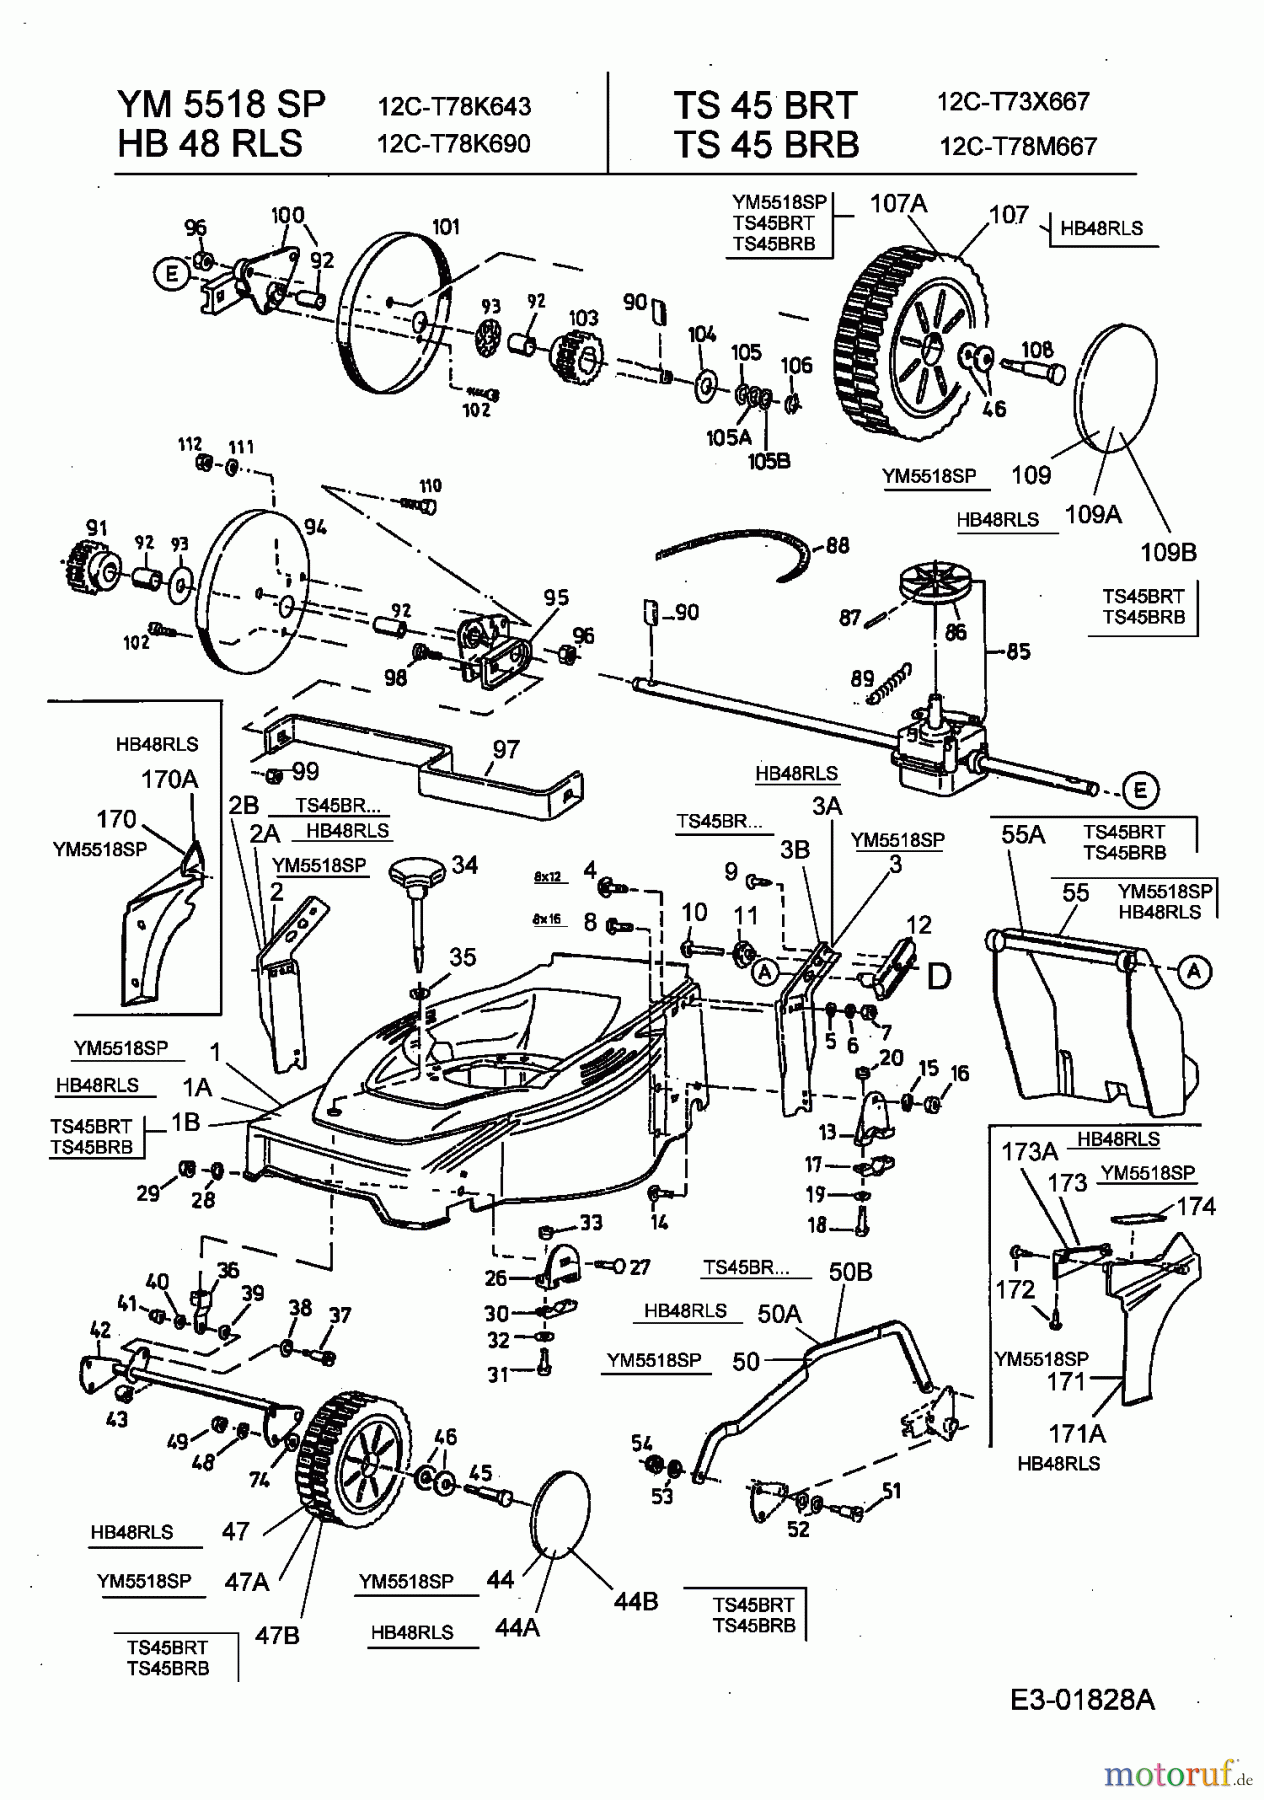  Gutbrod Petrol mower self propelled HB 48 RLS 12C-T78K690  (2003) Gearbox, Wheels, Cutting hight adjustment